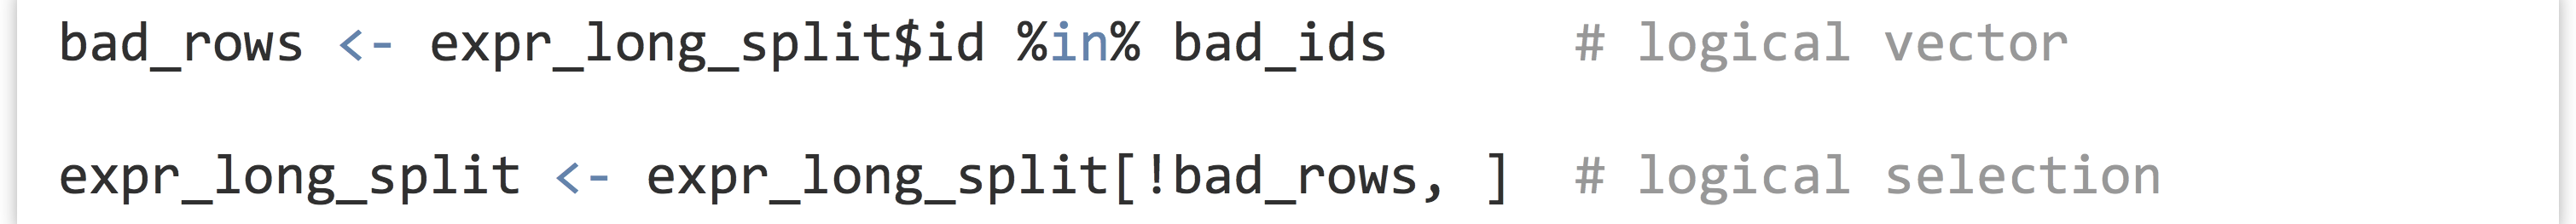 III.7_15_r_134_remove_bad_rows